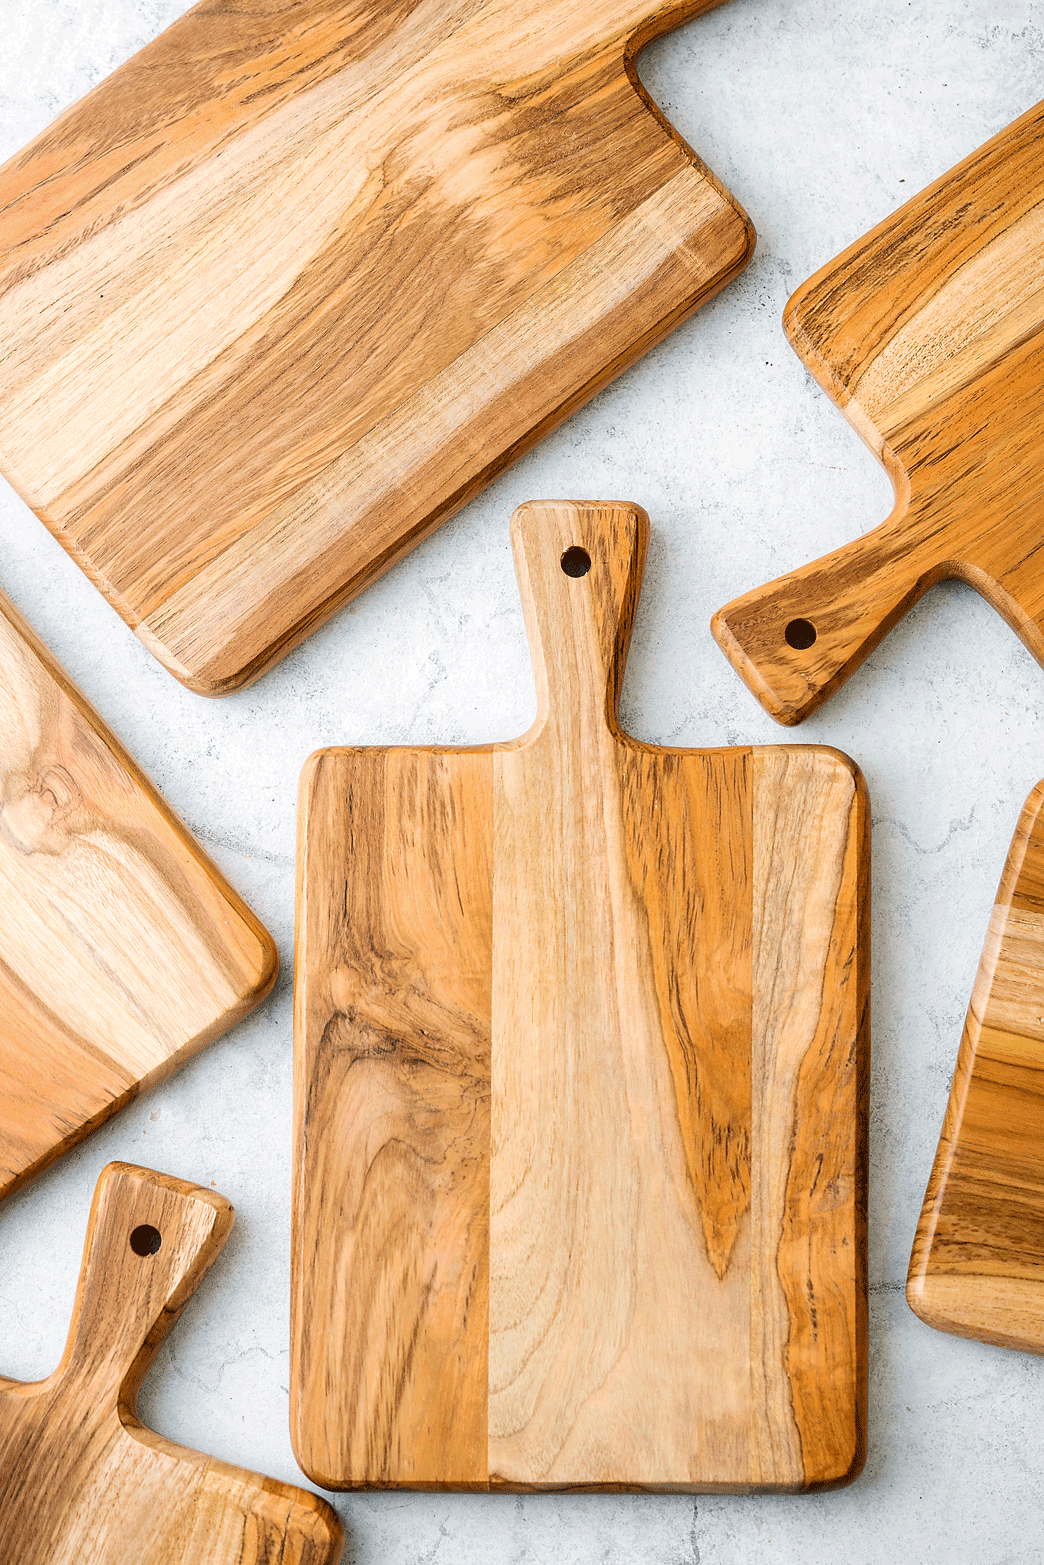 Thumbnail preview #0 for Samgun - Classic wooden chopping board